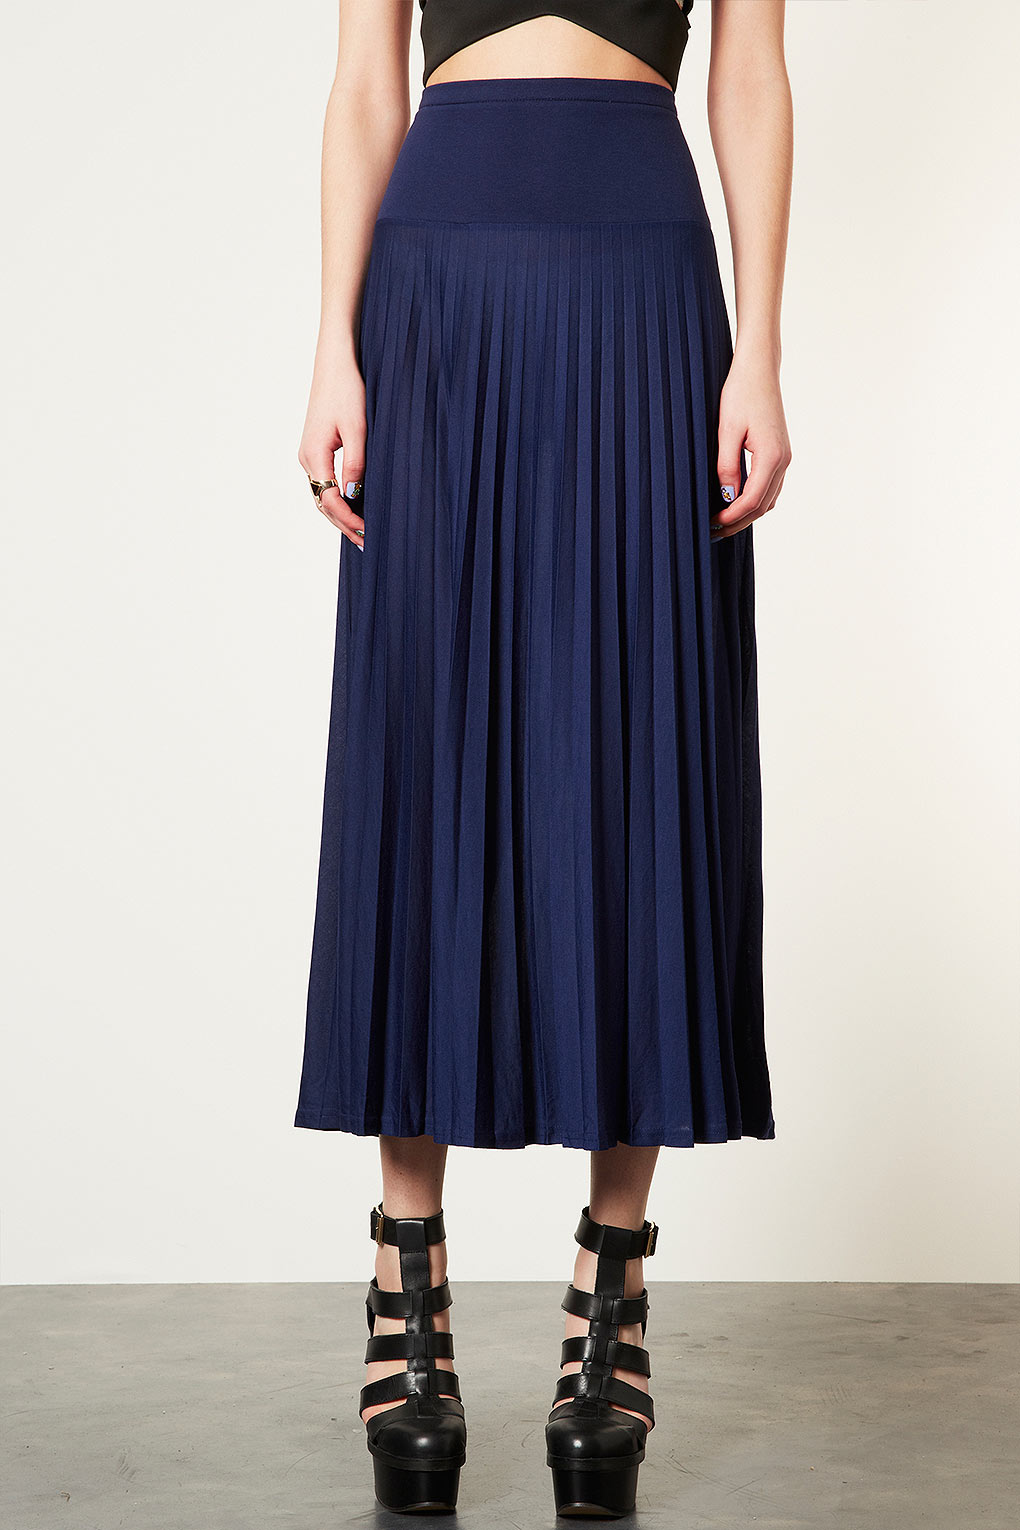 TOPSHOP High Waist Pleated Maxi Skirt in Navy Blue (Blue) - Lyst